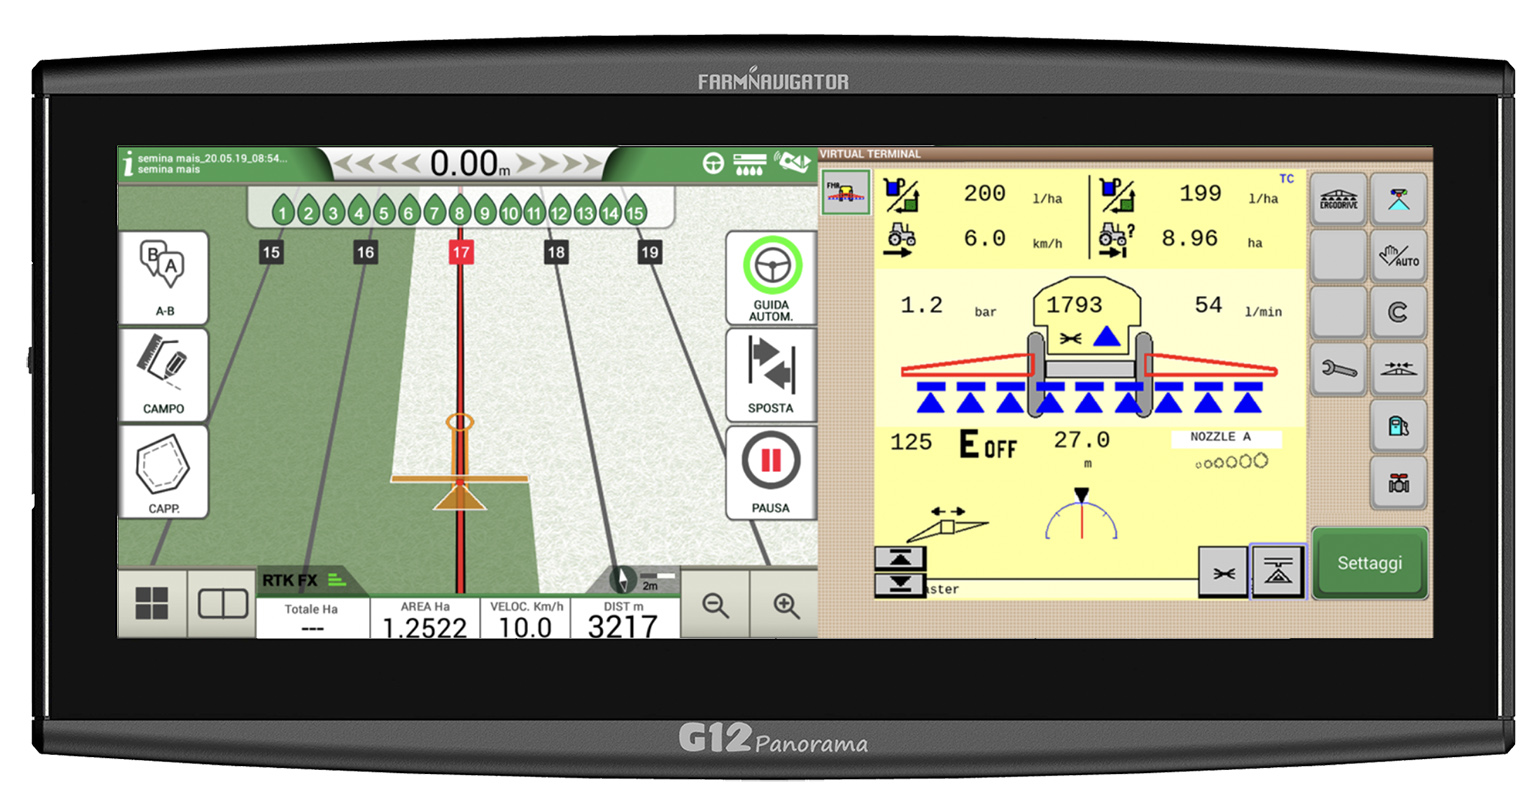 Farmnavigator g12 double screen